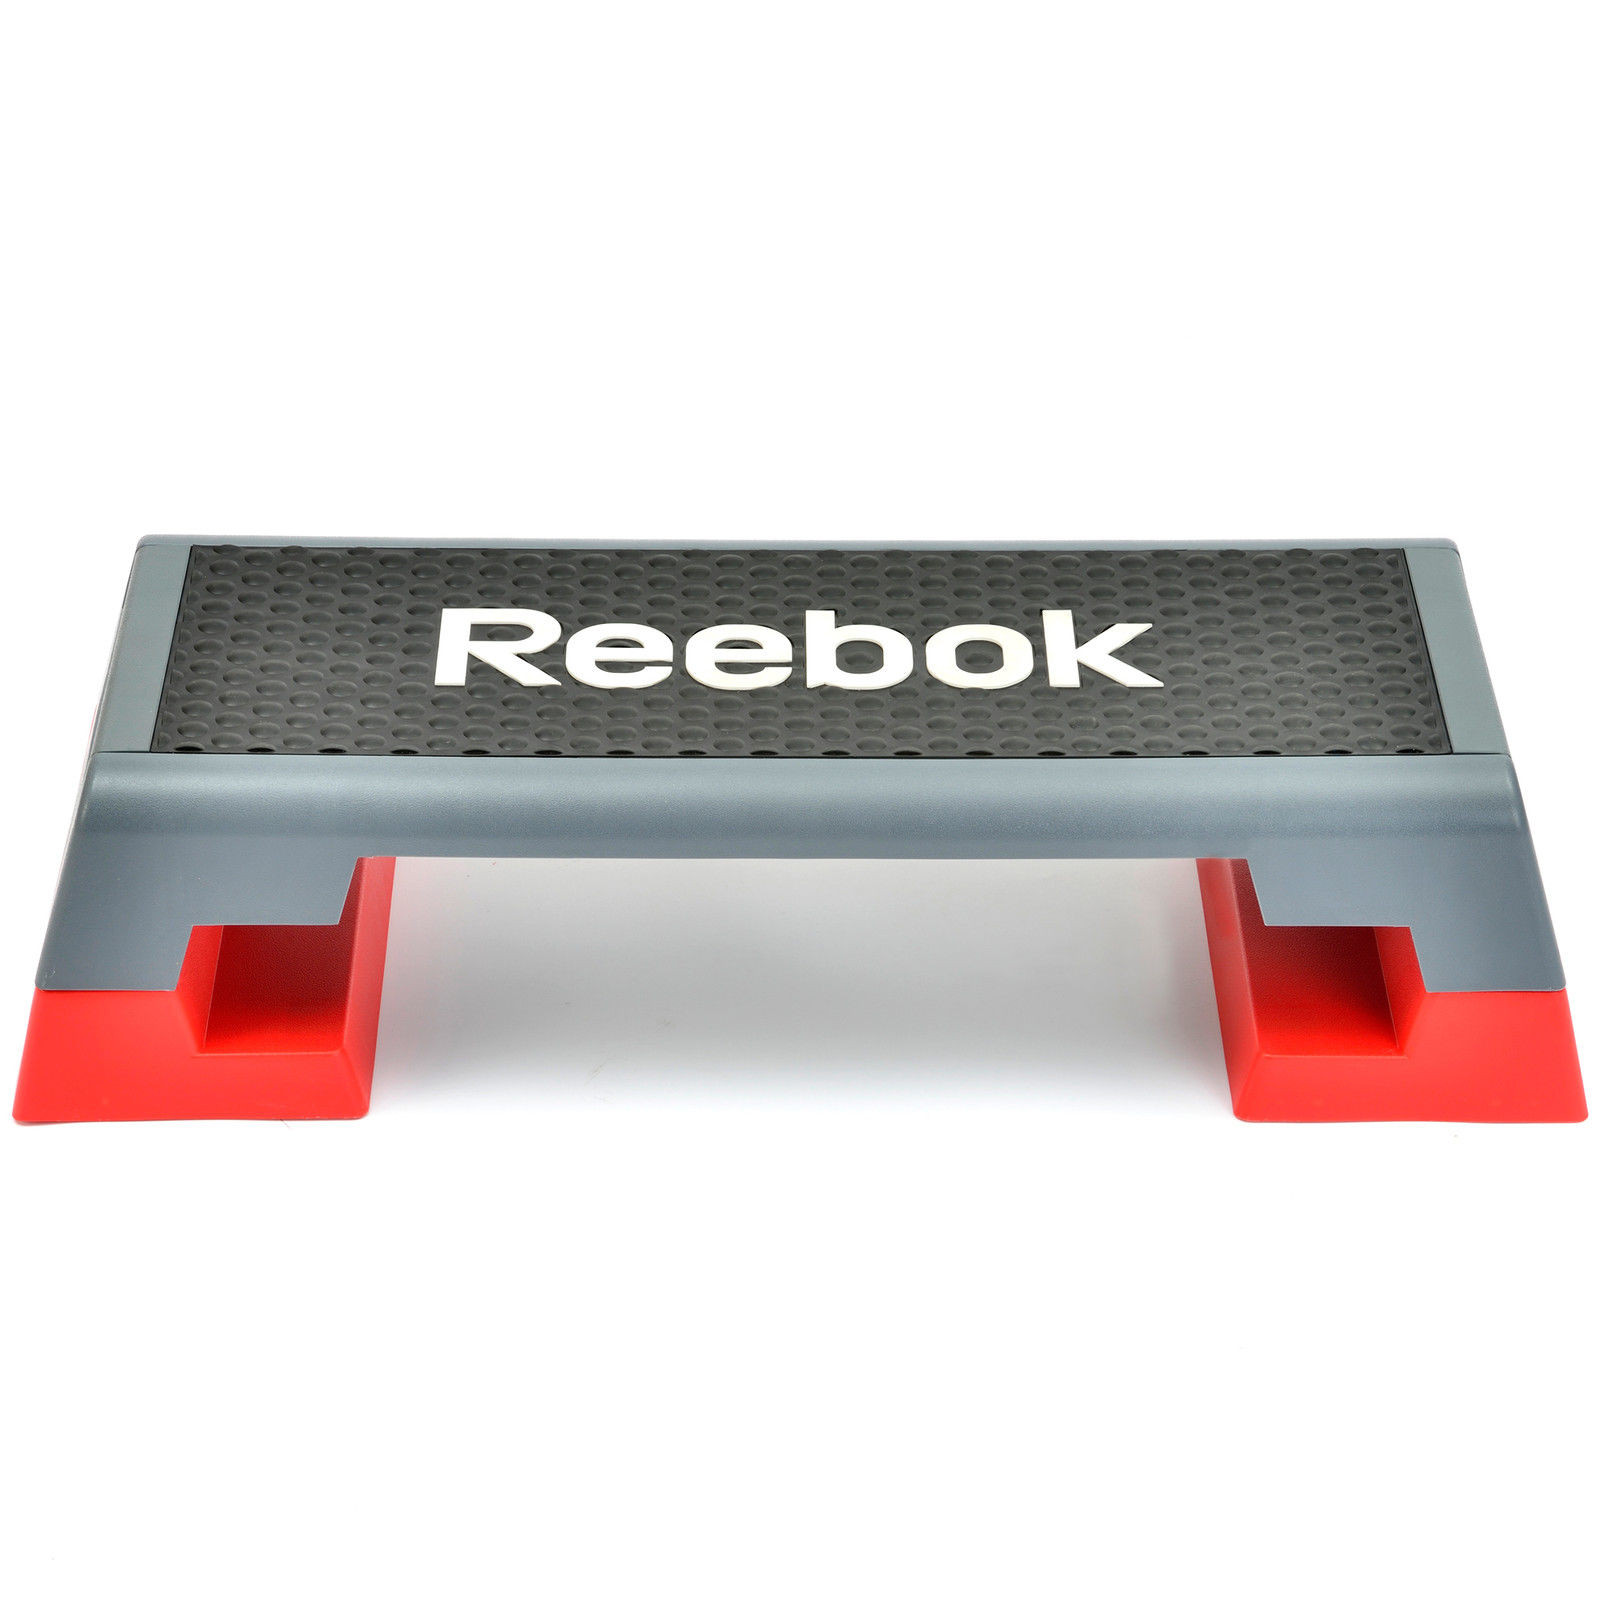 reebok deck workout dvd